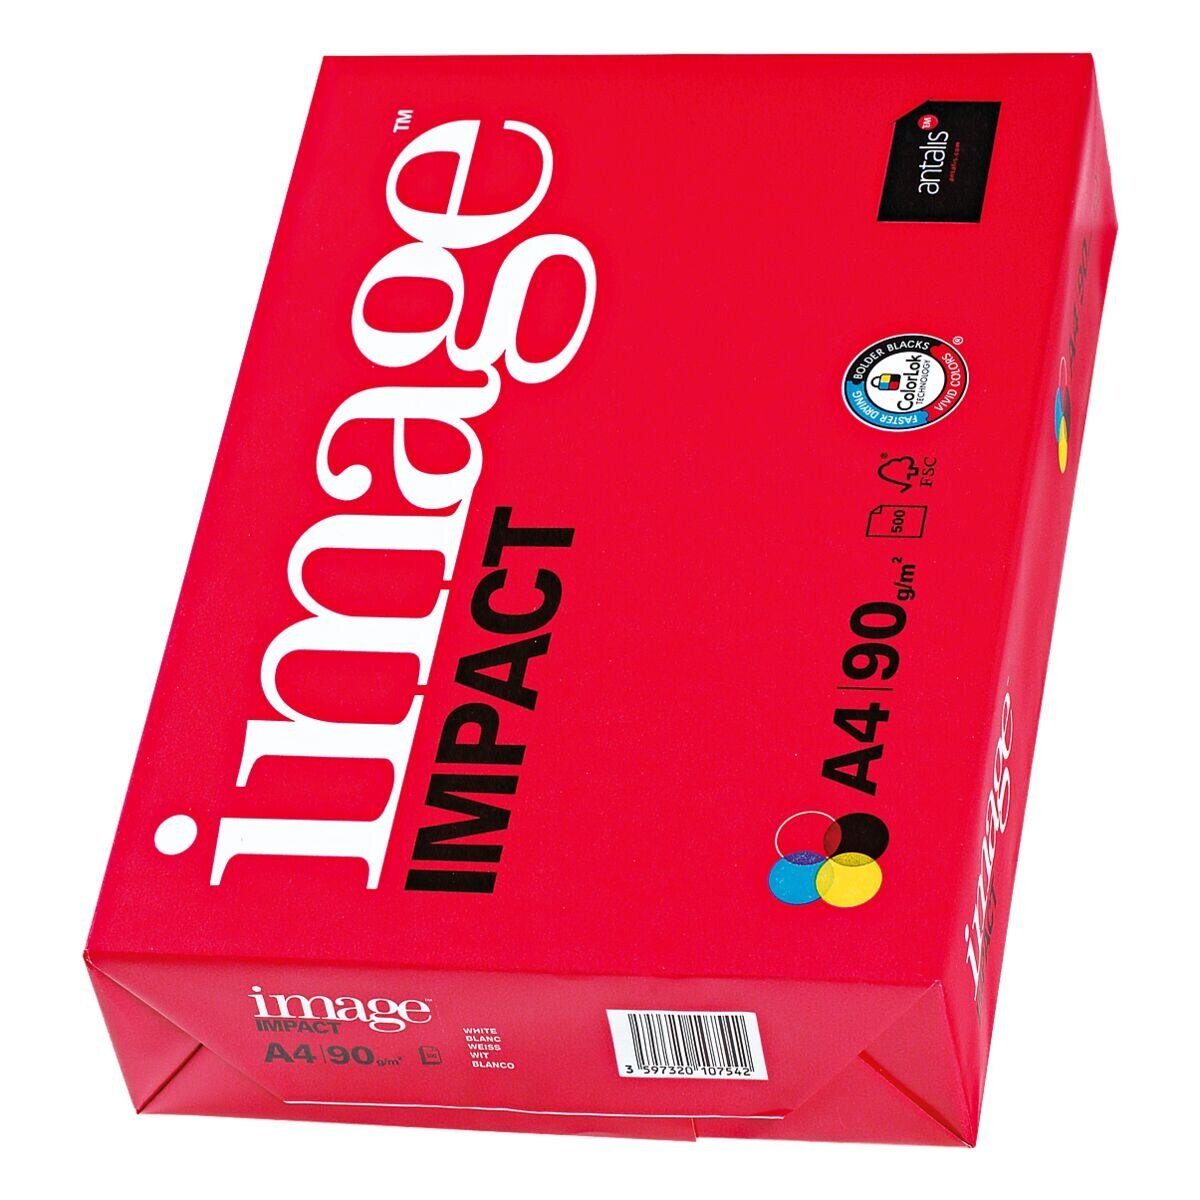 ANTALIS Druckerpapier image IMPACT, Format DIN A4, 90 g/m², 168 CIE, 500 Blatt